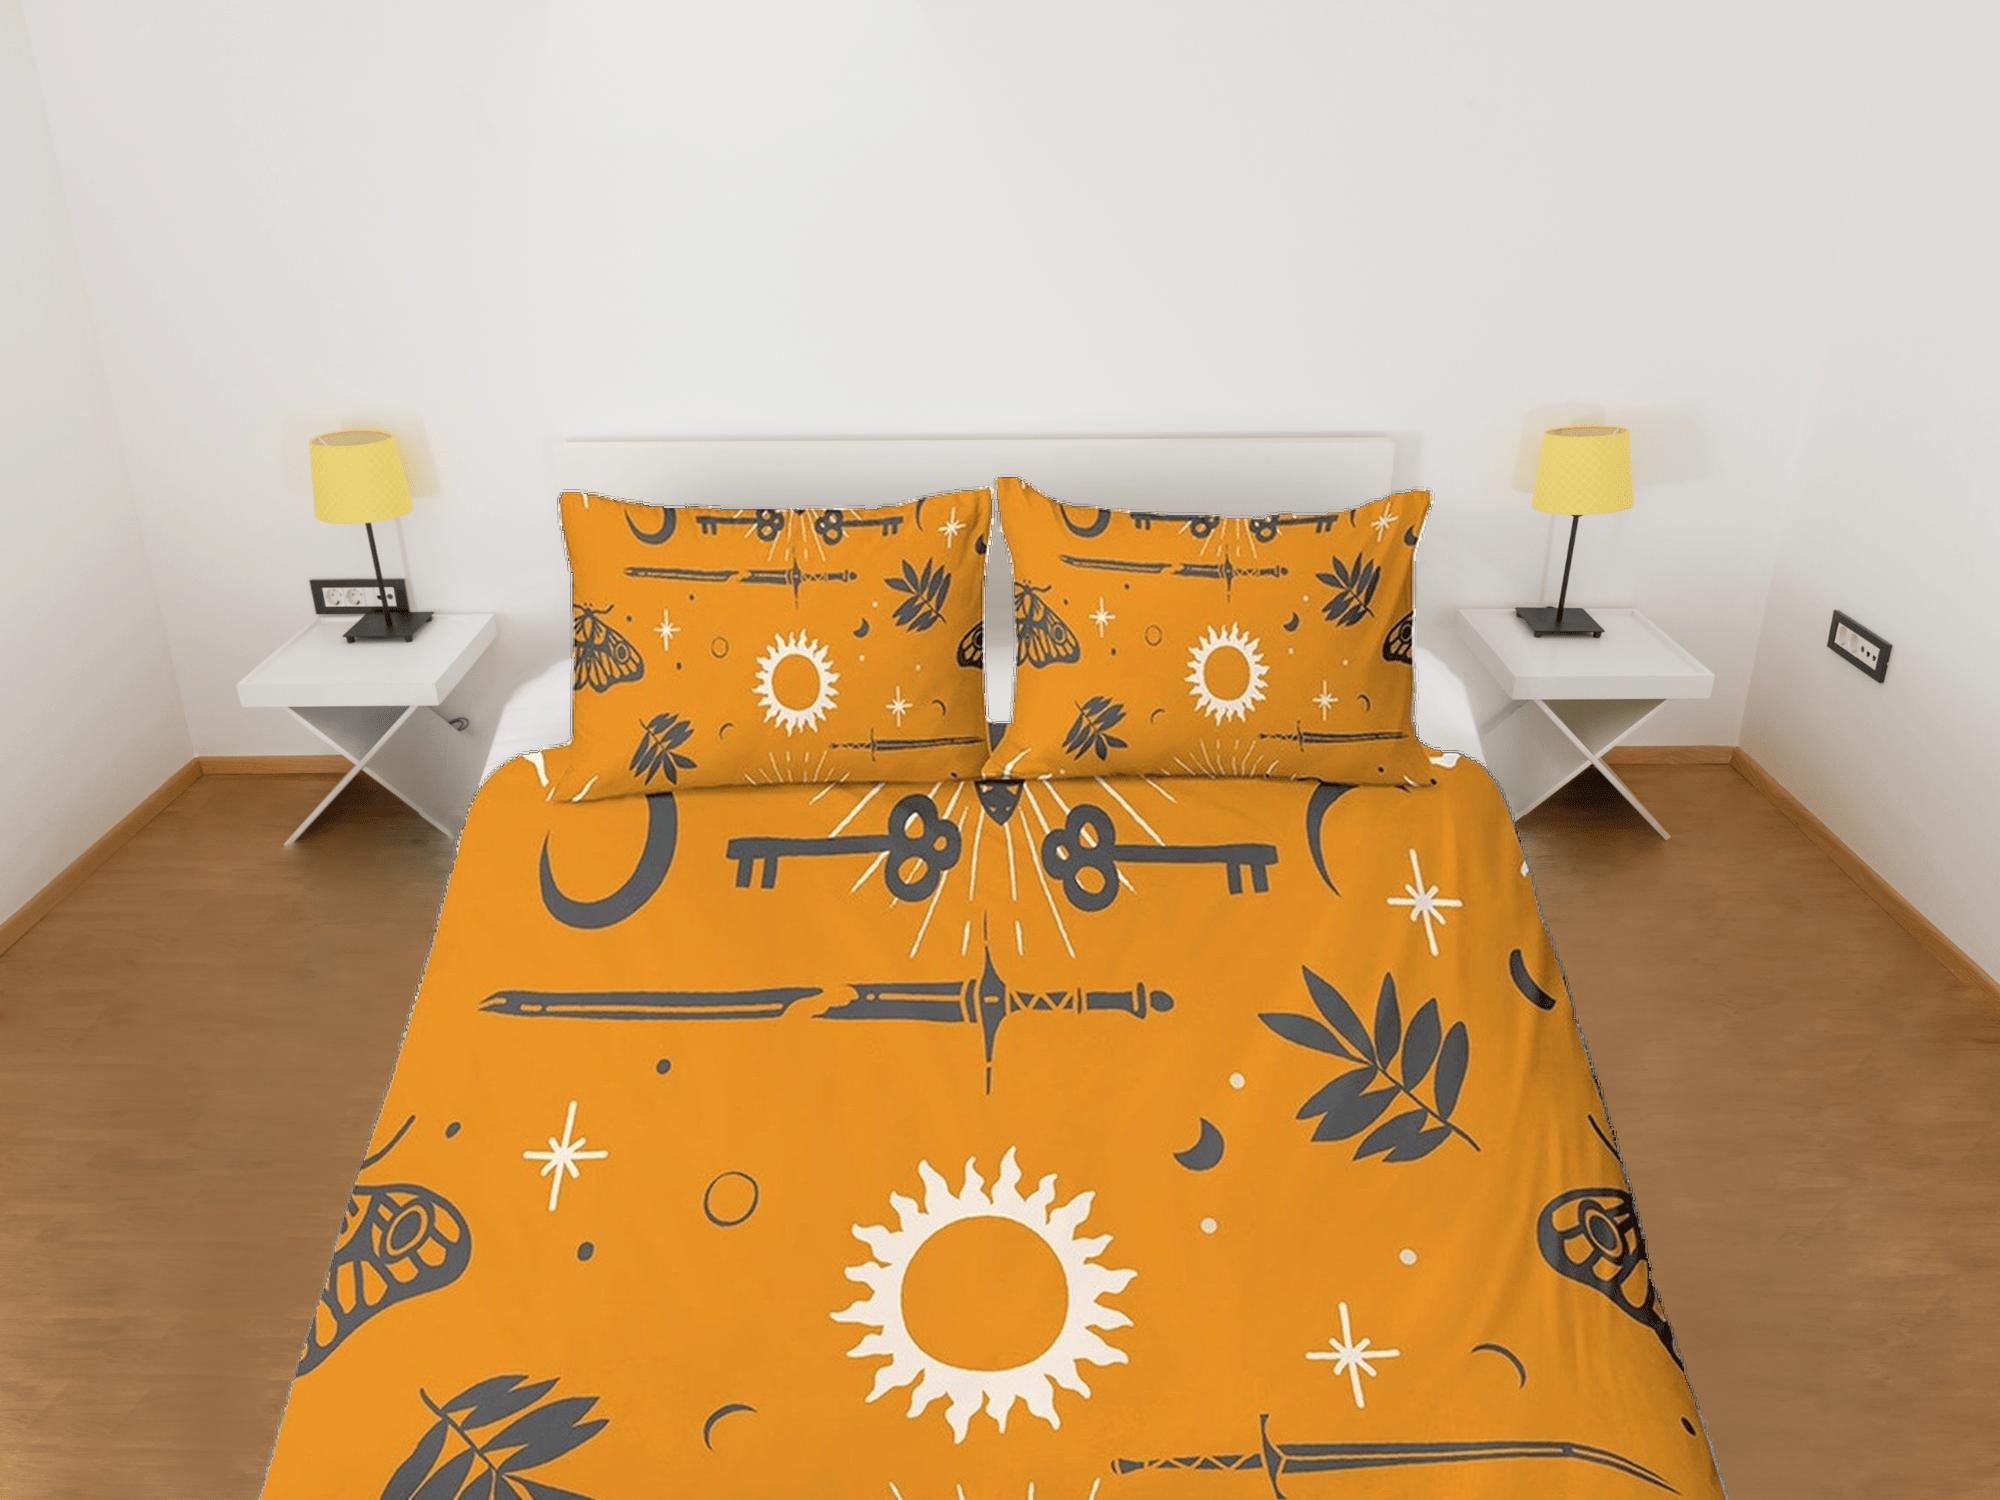 daintyduvet Celestial bedding yellow, witchy decor dorm bedding, aesthetic duvet cover set, boho bedding set full king queen, astrology gifts, luna moth